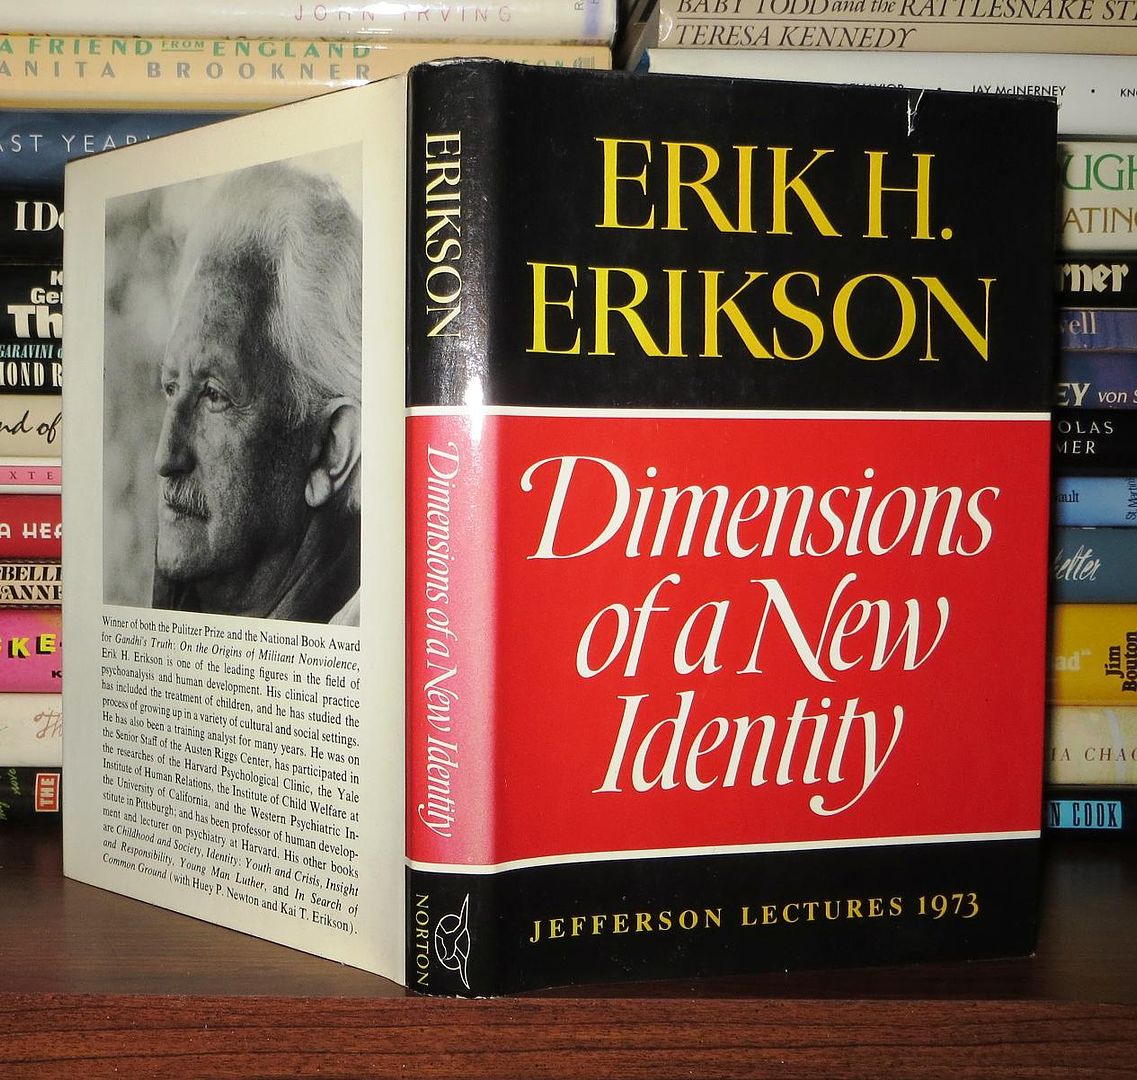 ERIKSON, ERIK H. - Dimensions of a New Identity